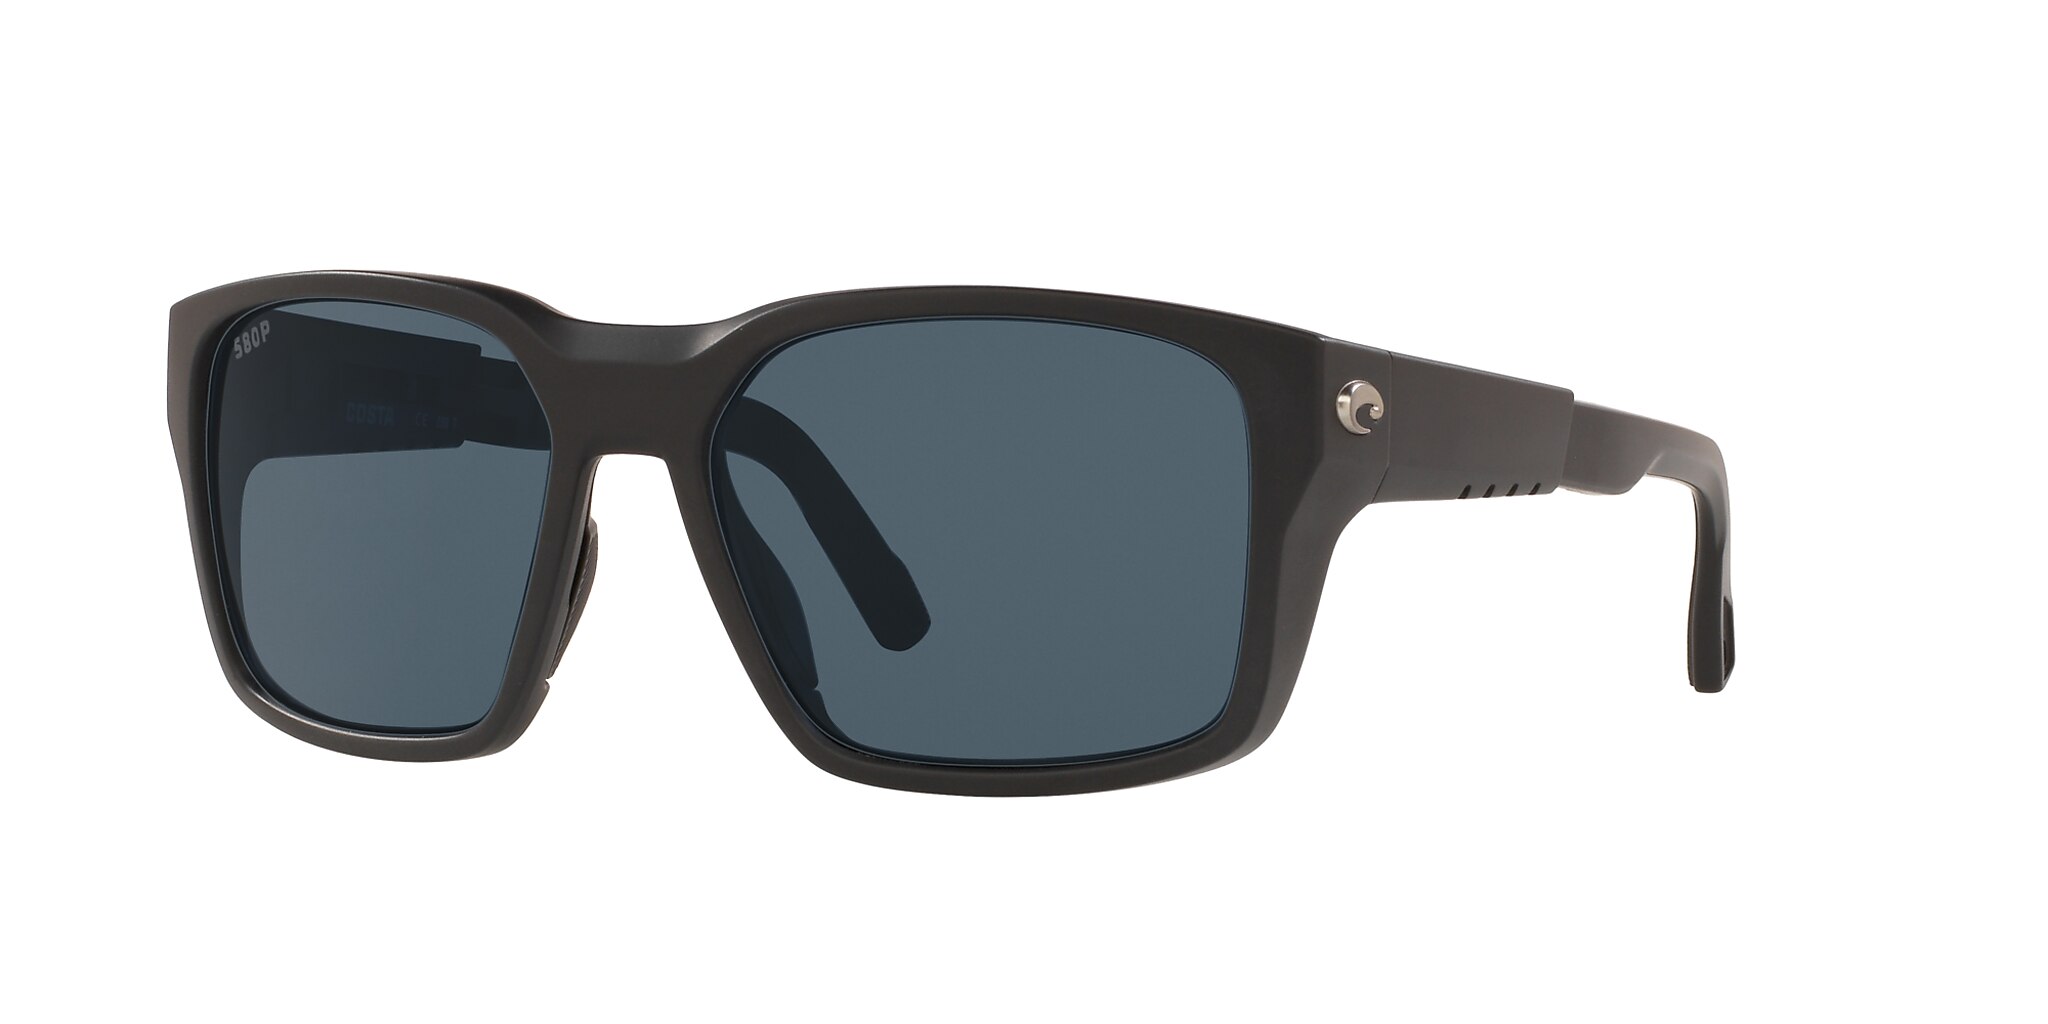 Tailwalker Polarized Sunglasses in Gray | Costa Del Mar®